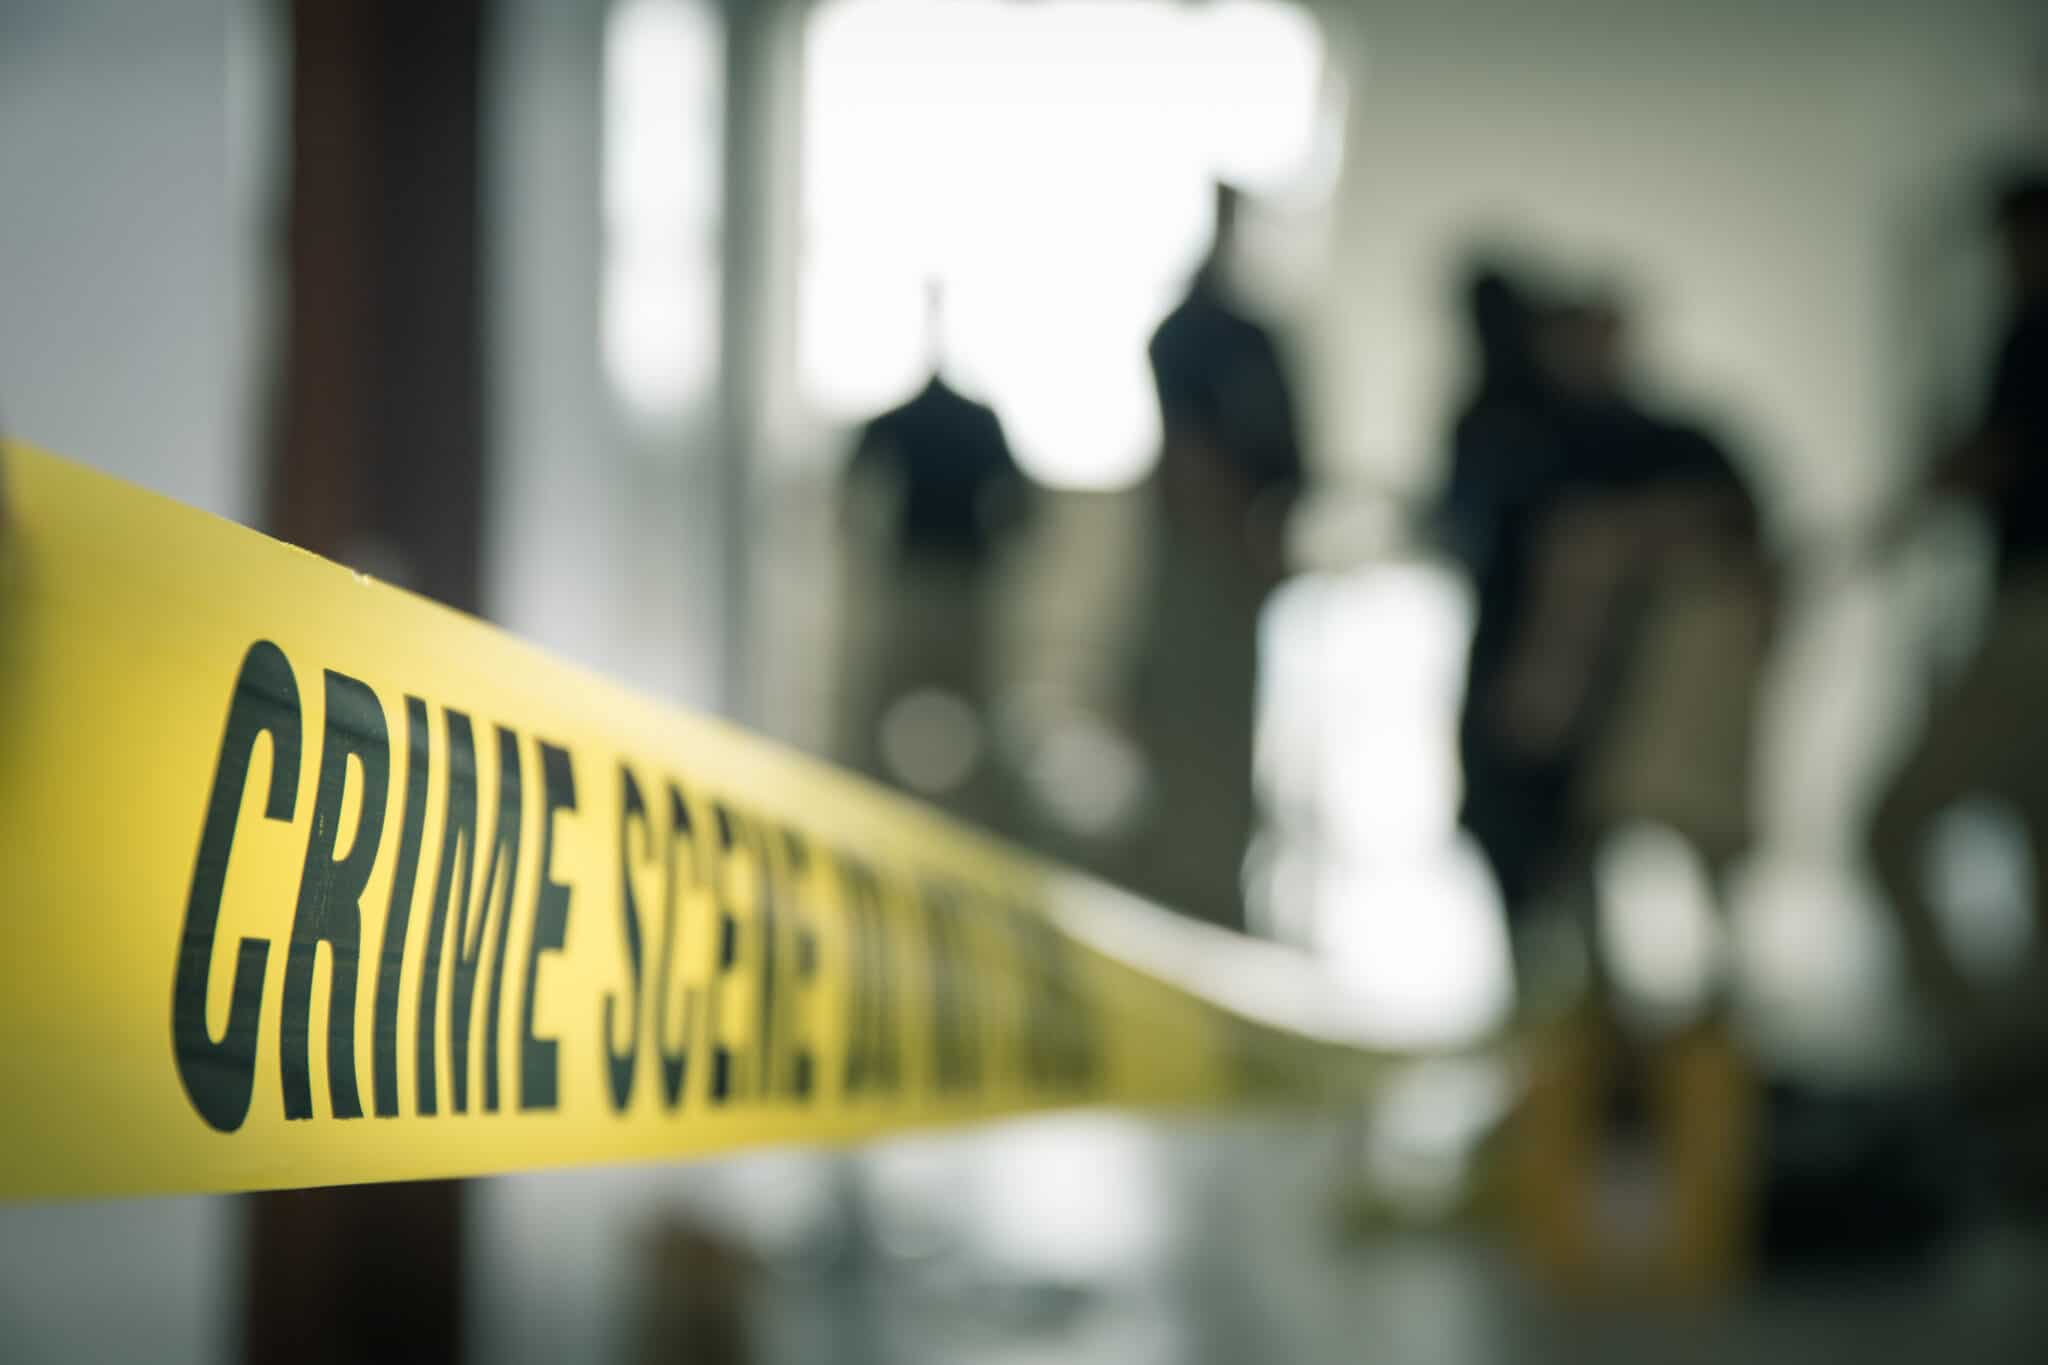 Police: Gwinnett woman dead after accidental shooting